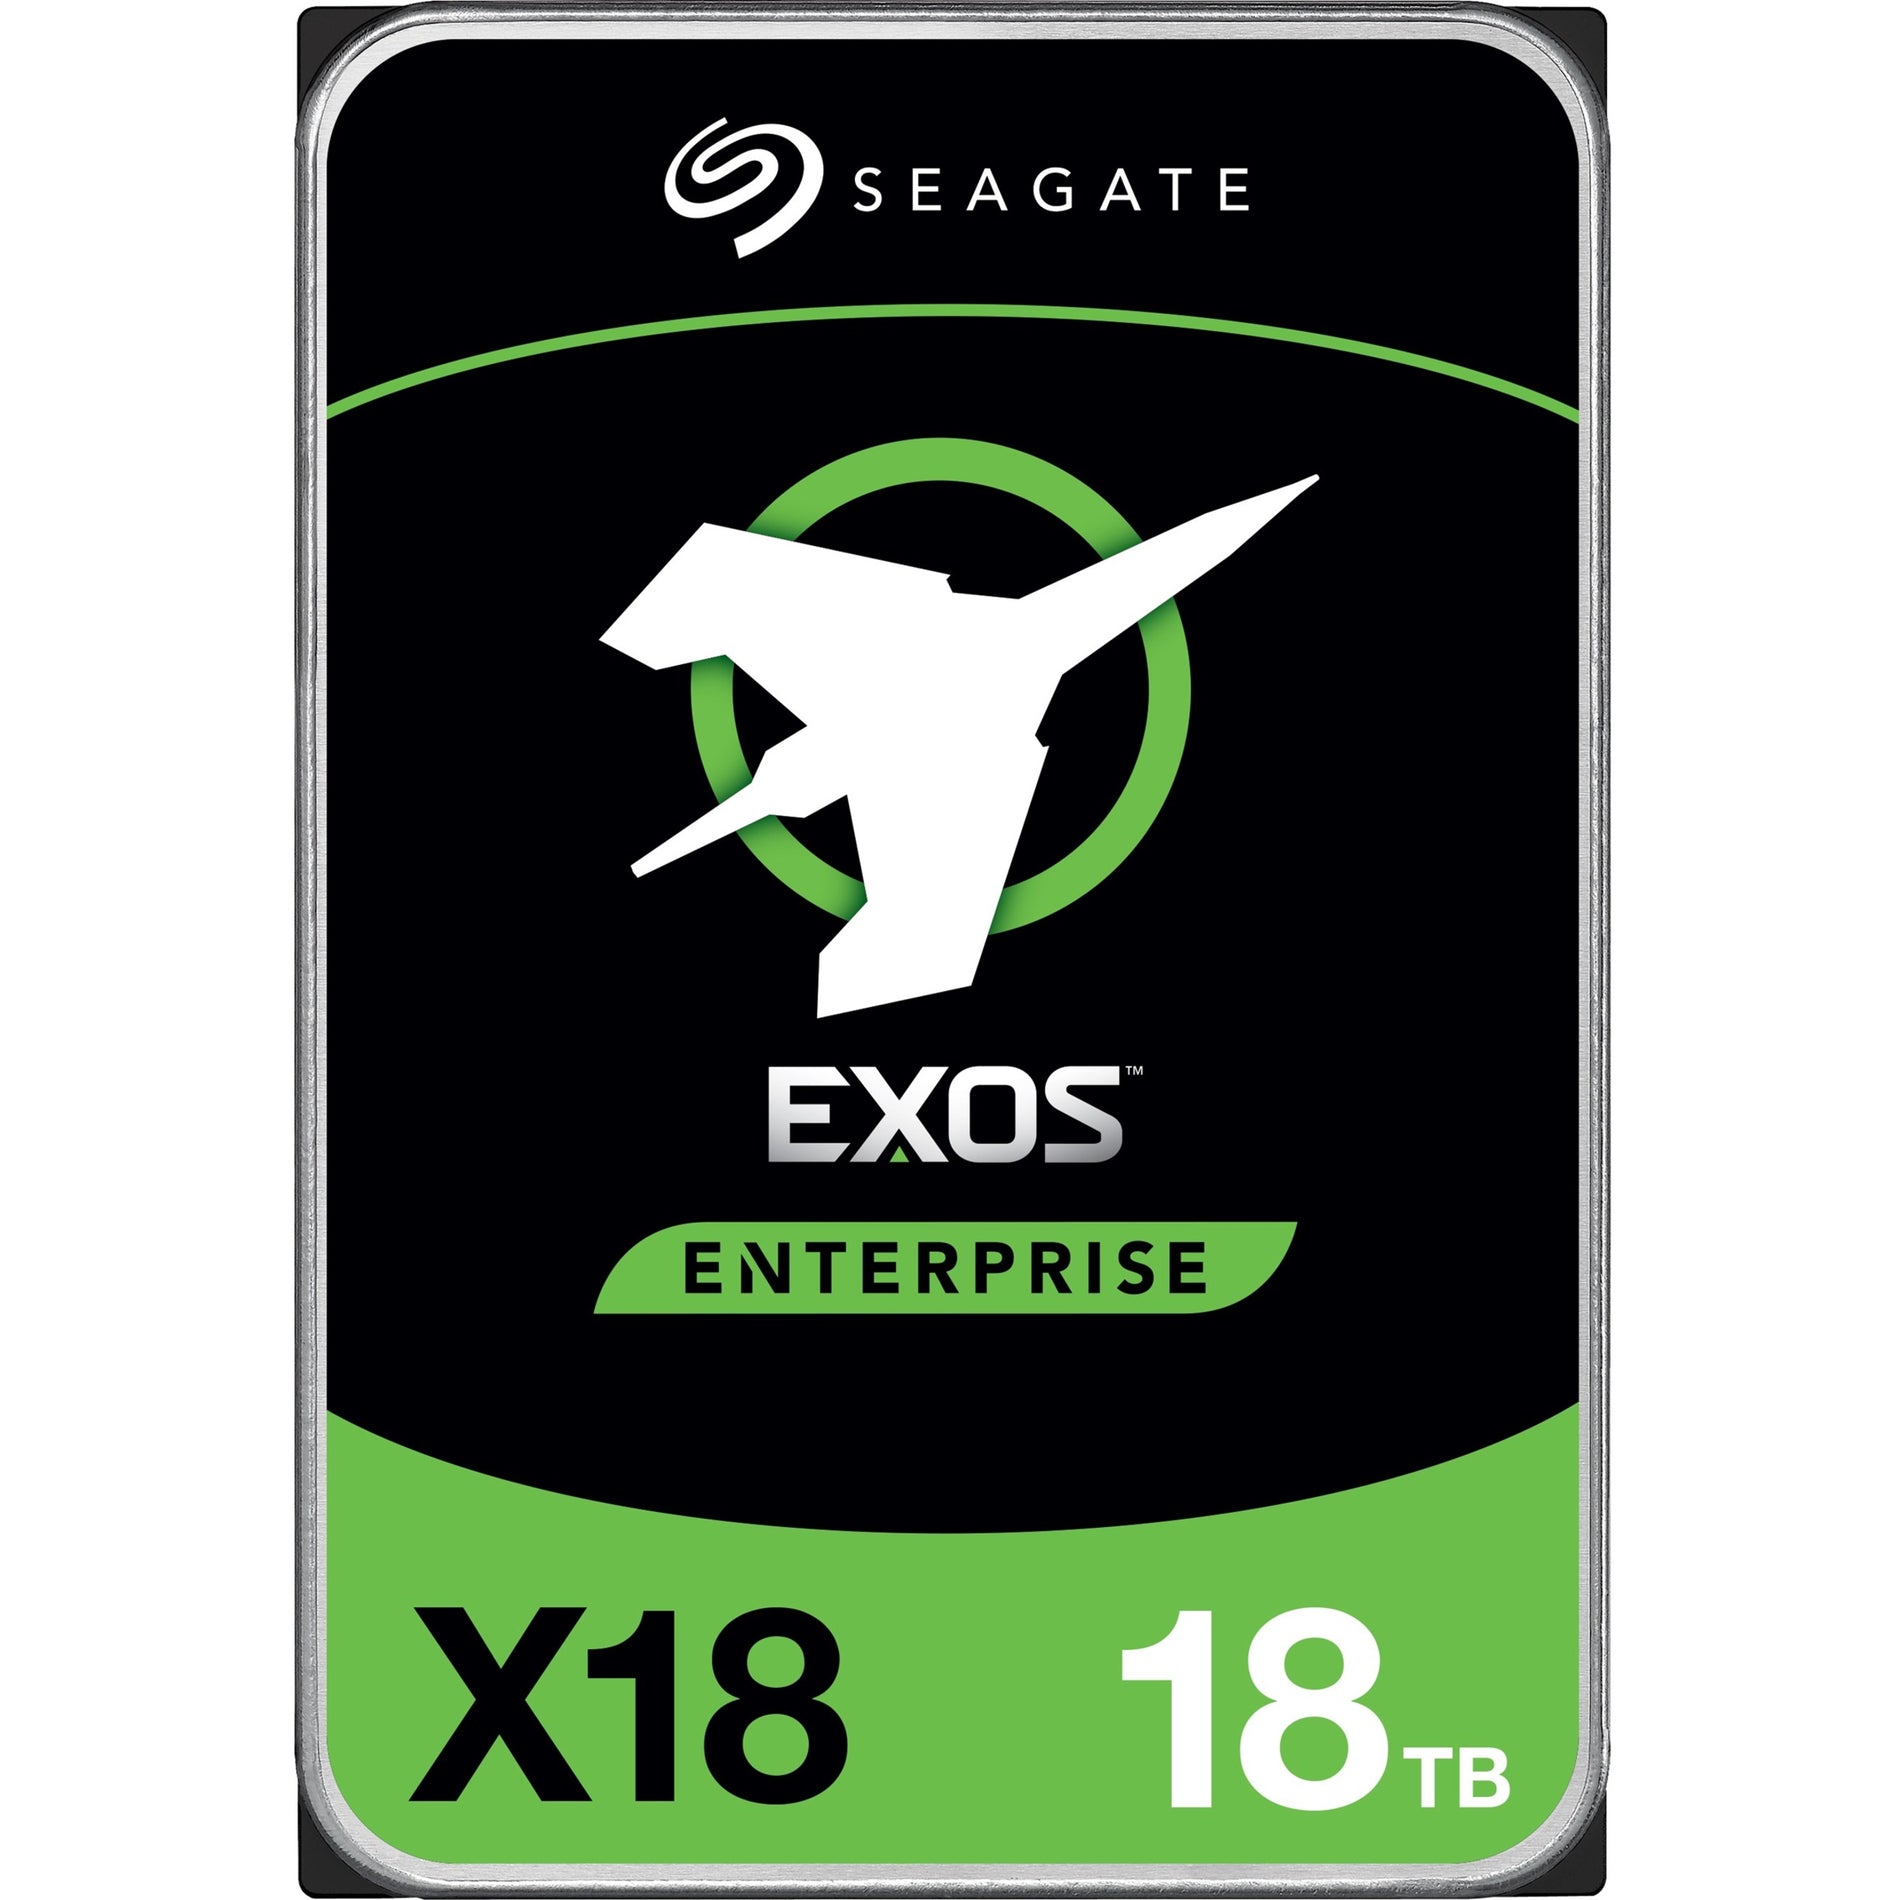 Seagate ST18000NM004J Exos X18 18TB SAS 3.5" Hard Drive, 7200RPM, 512e/4Kn, 5 Year Warranty